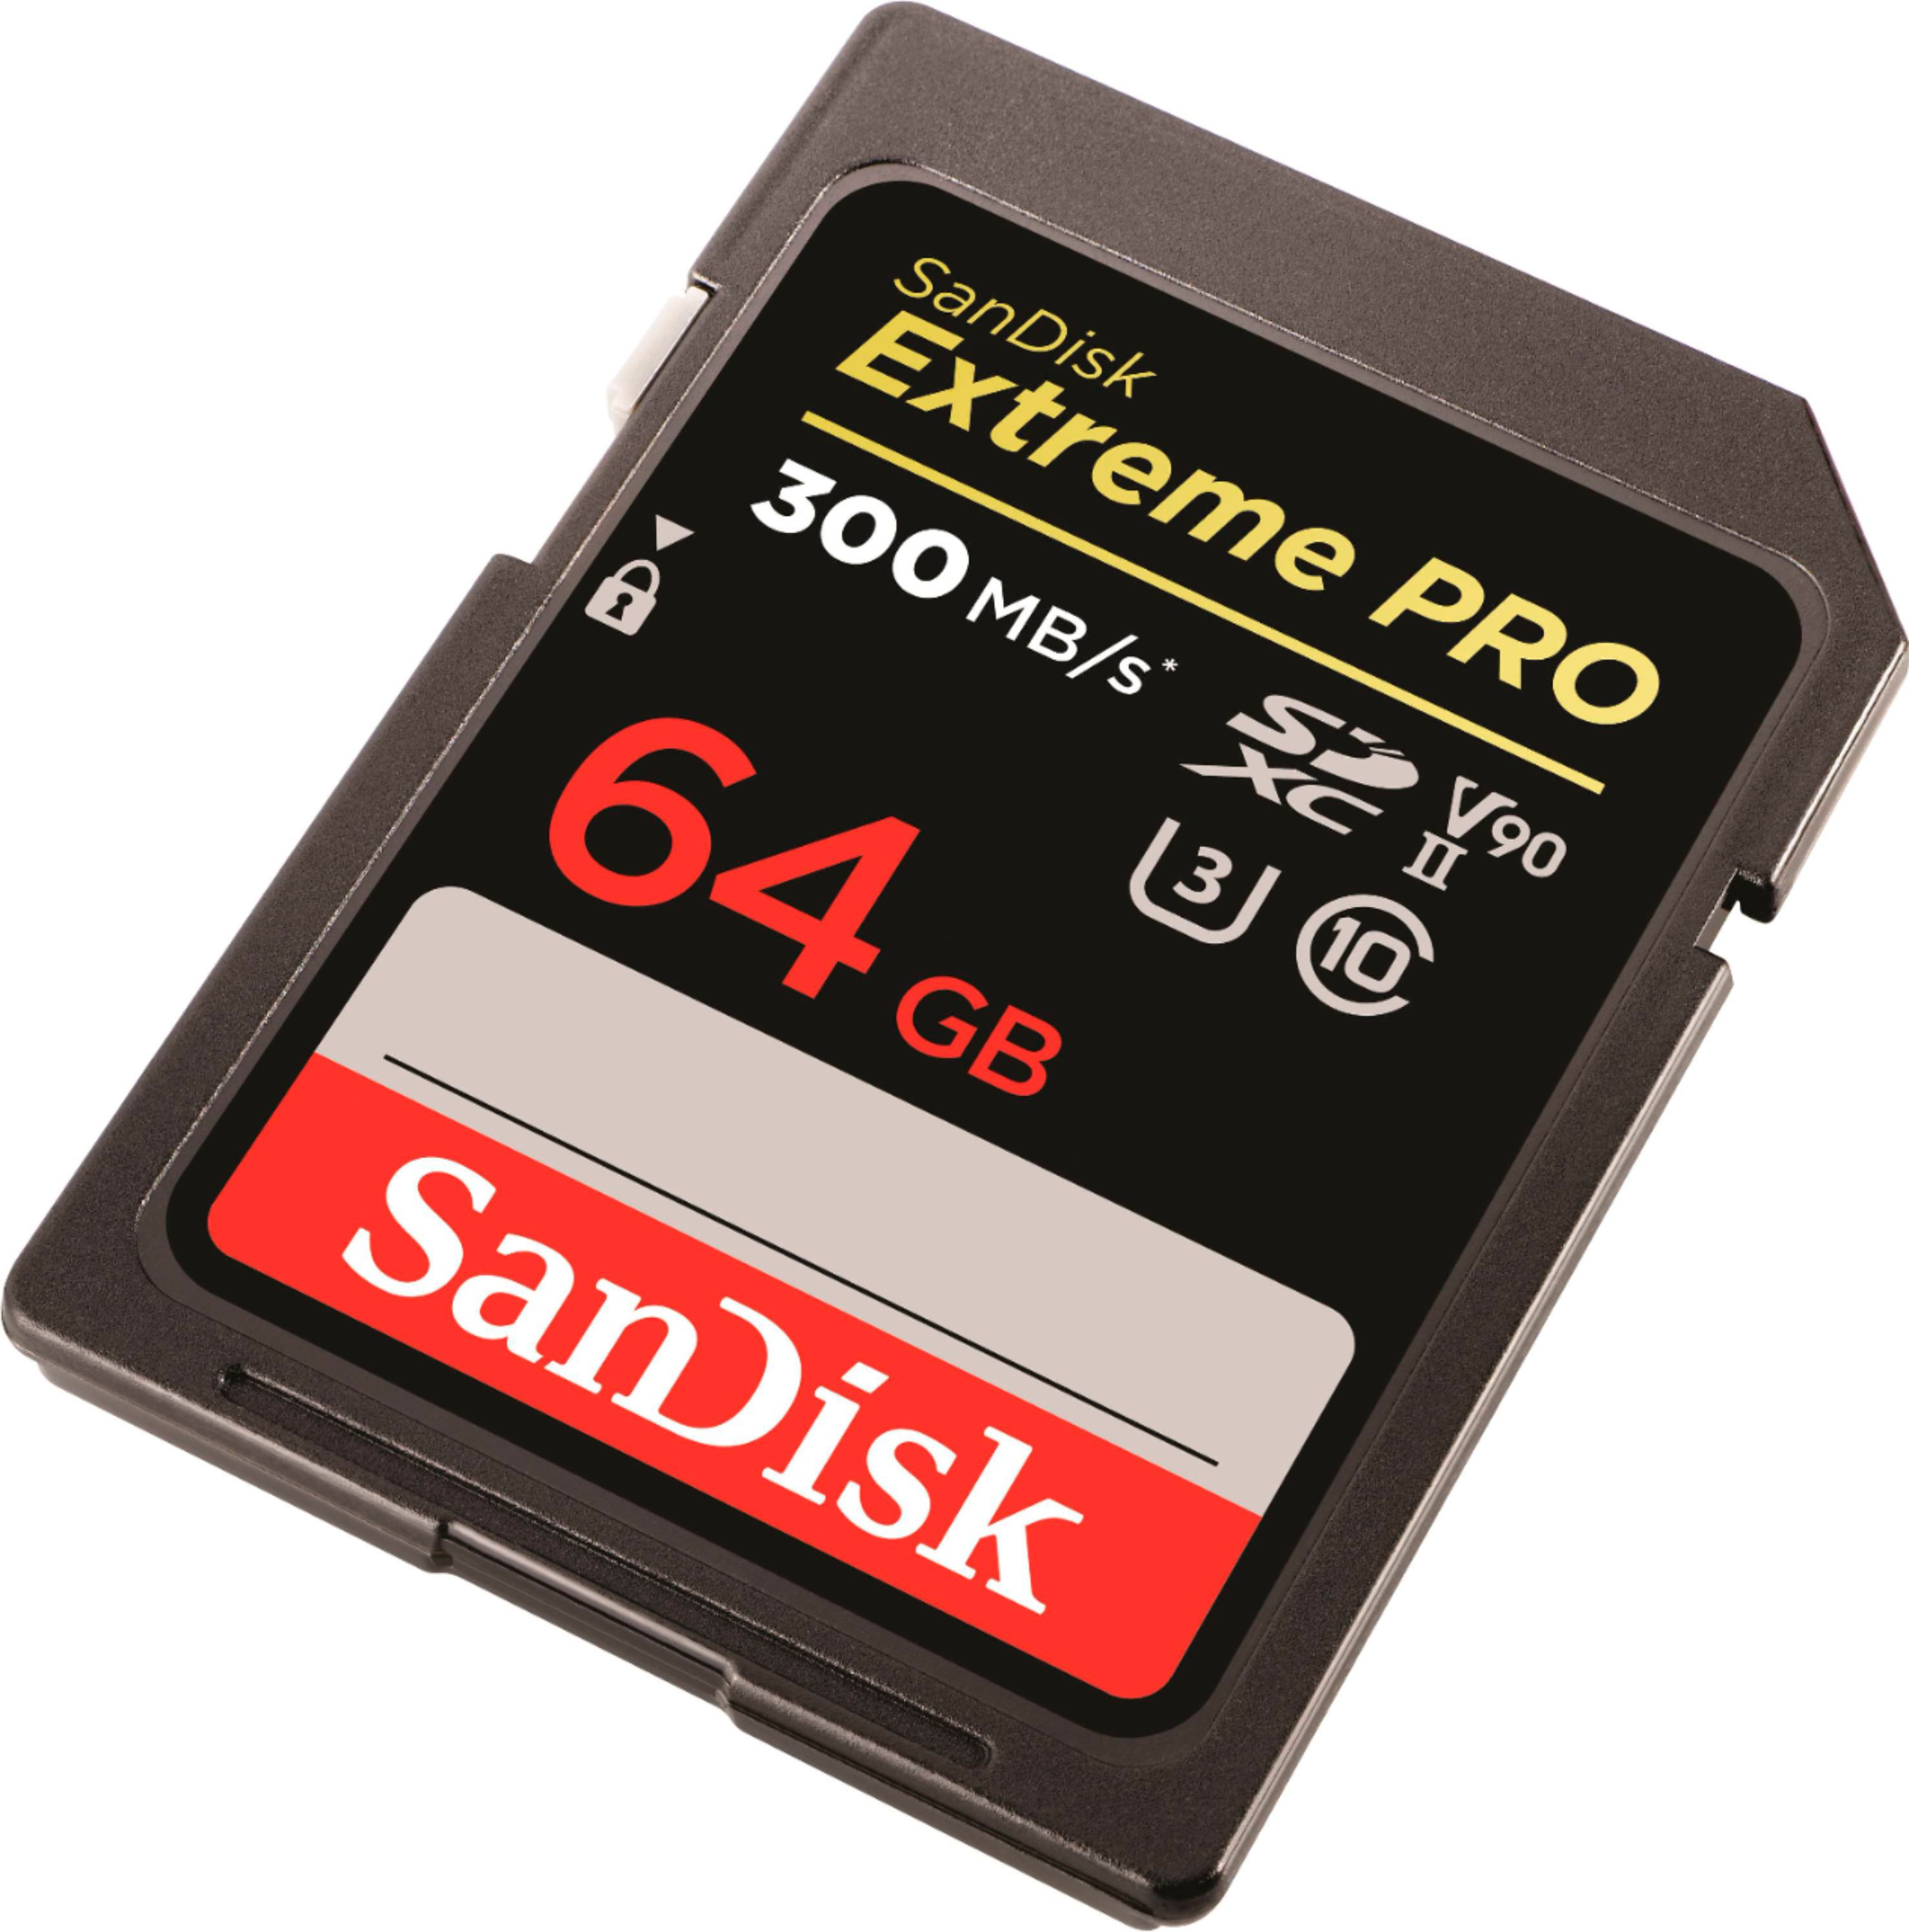 SanDisk Extreme Plus 64GB SD UHS-I Memory Card